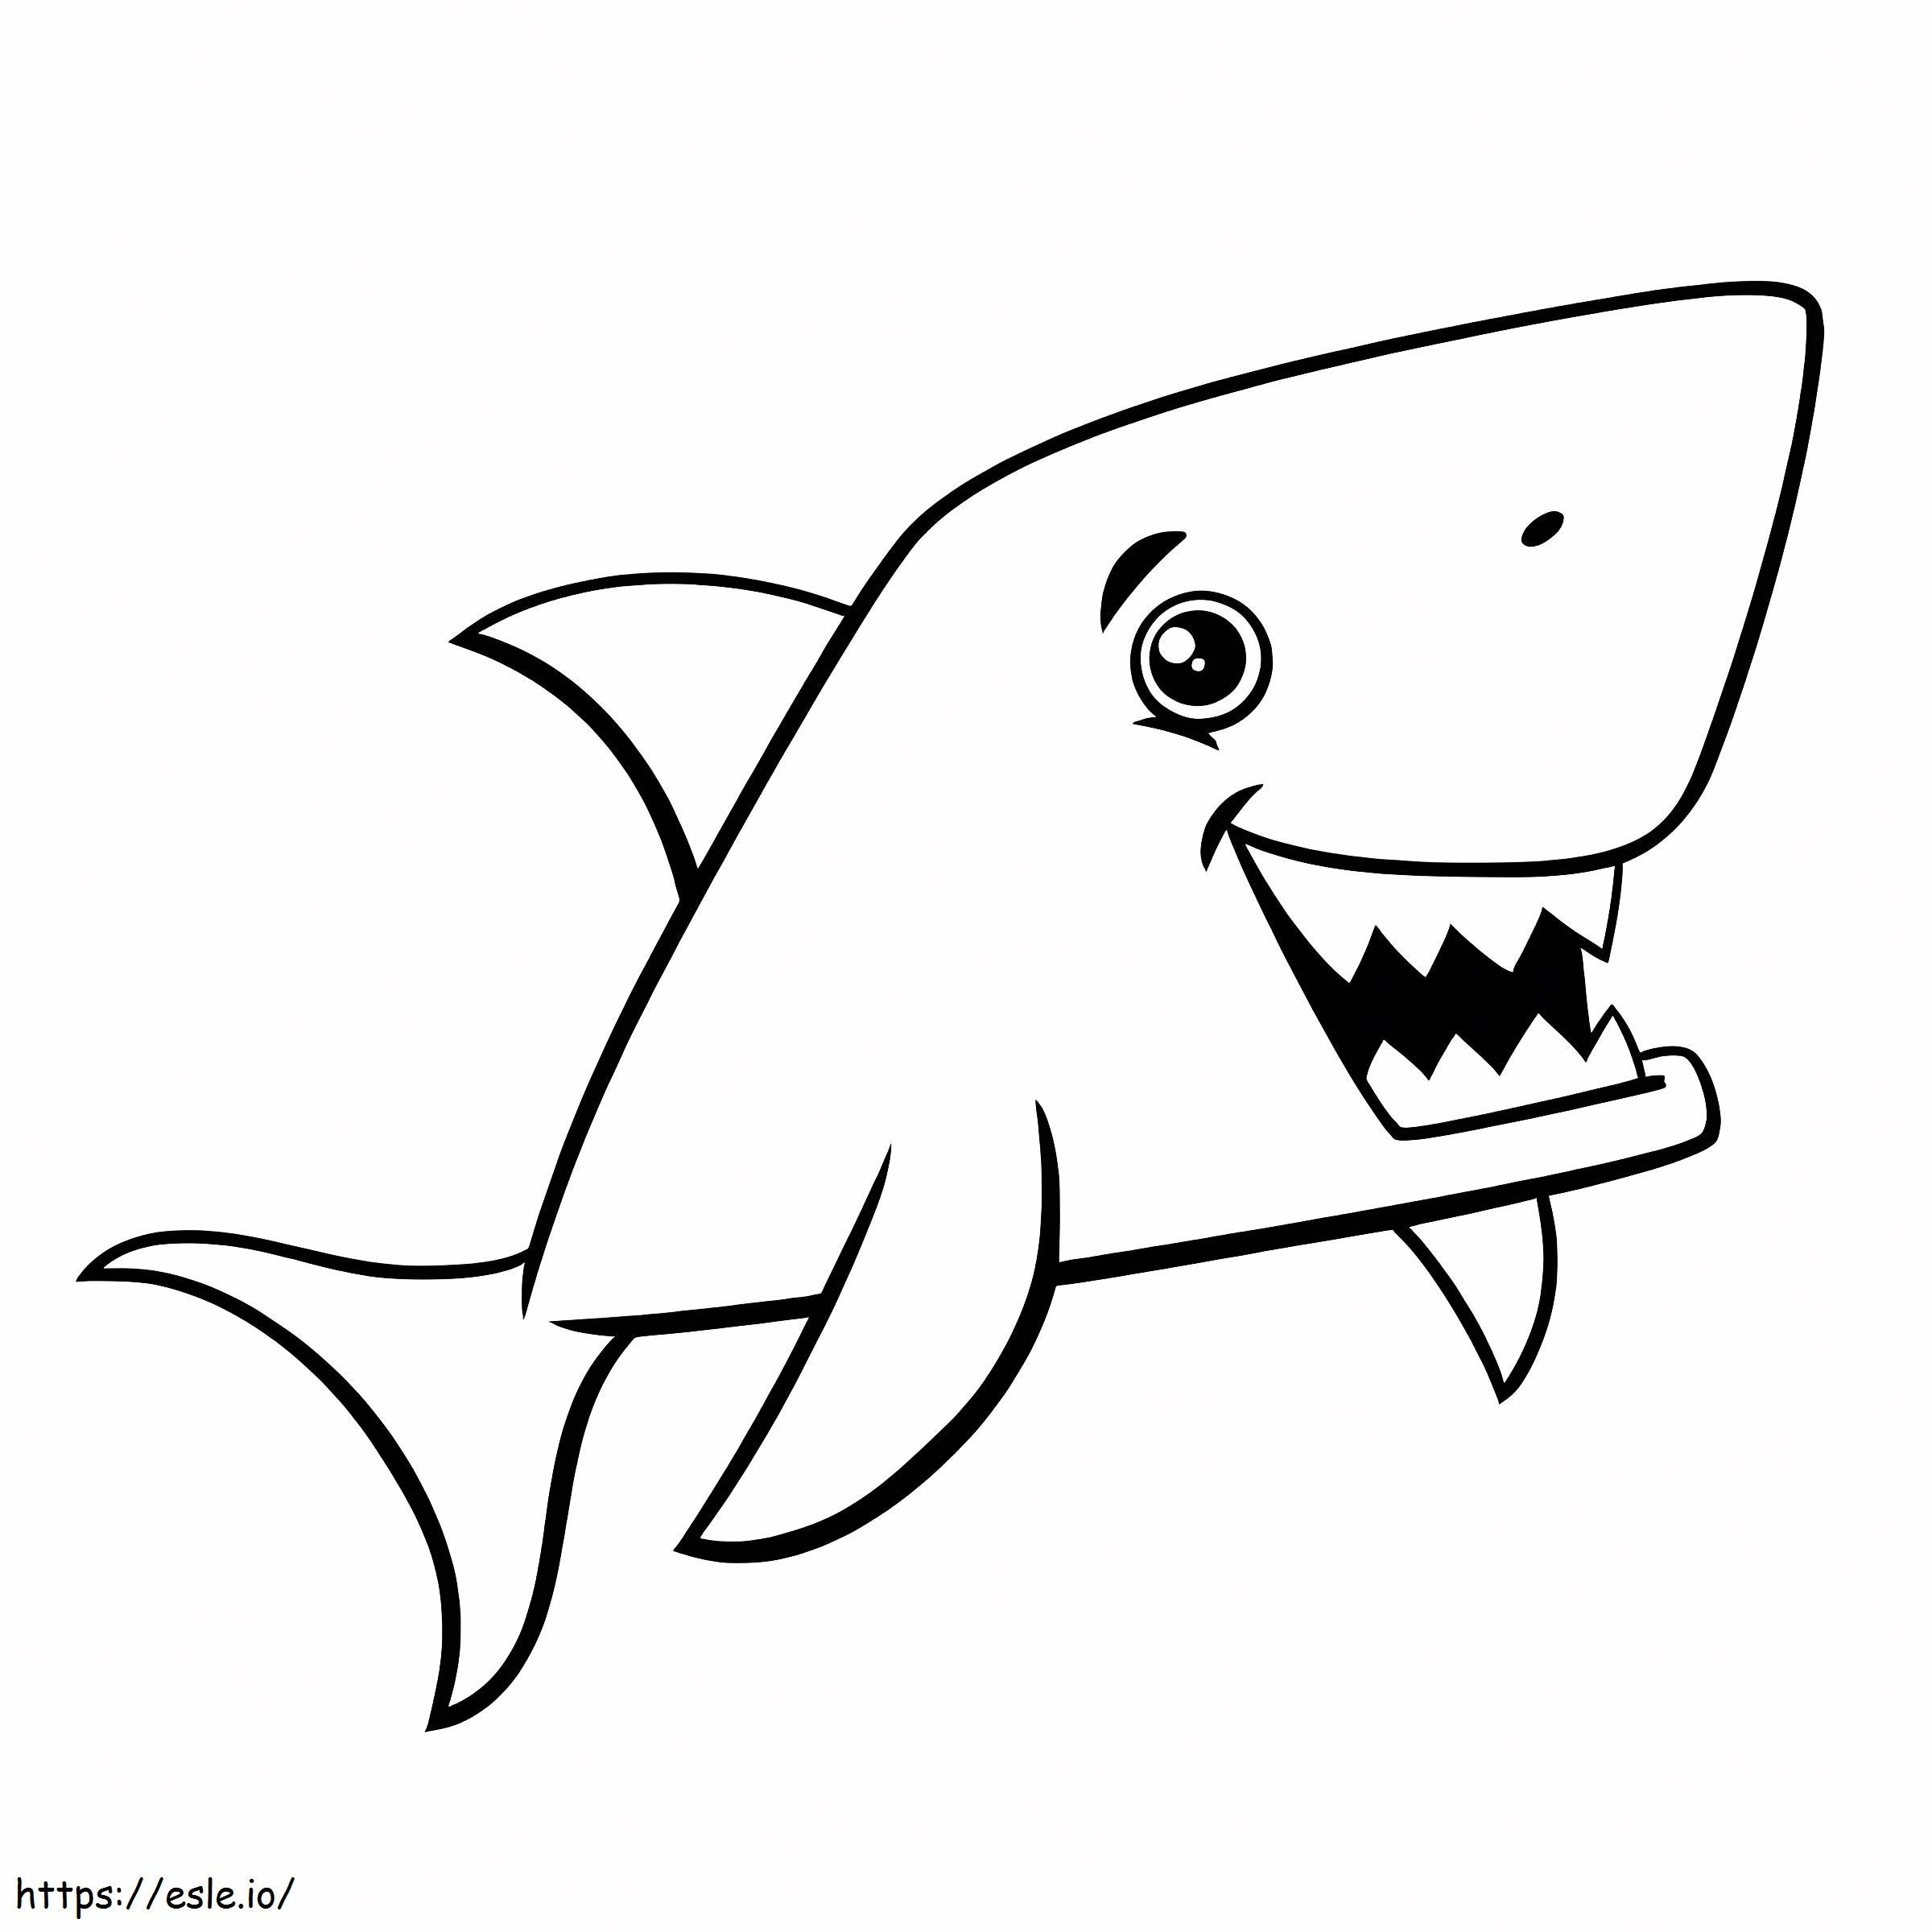 Cartoon-Hai ausmalbilder